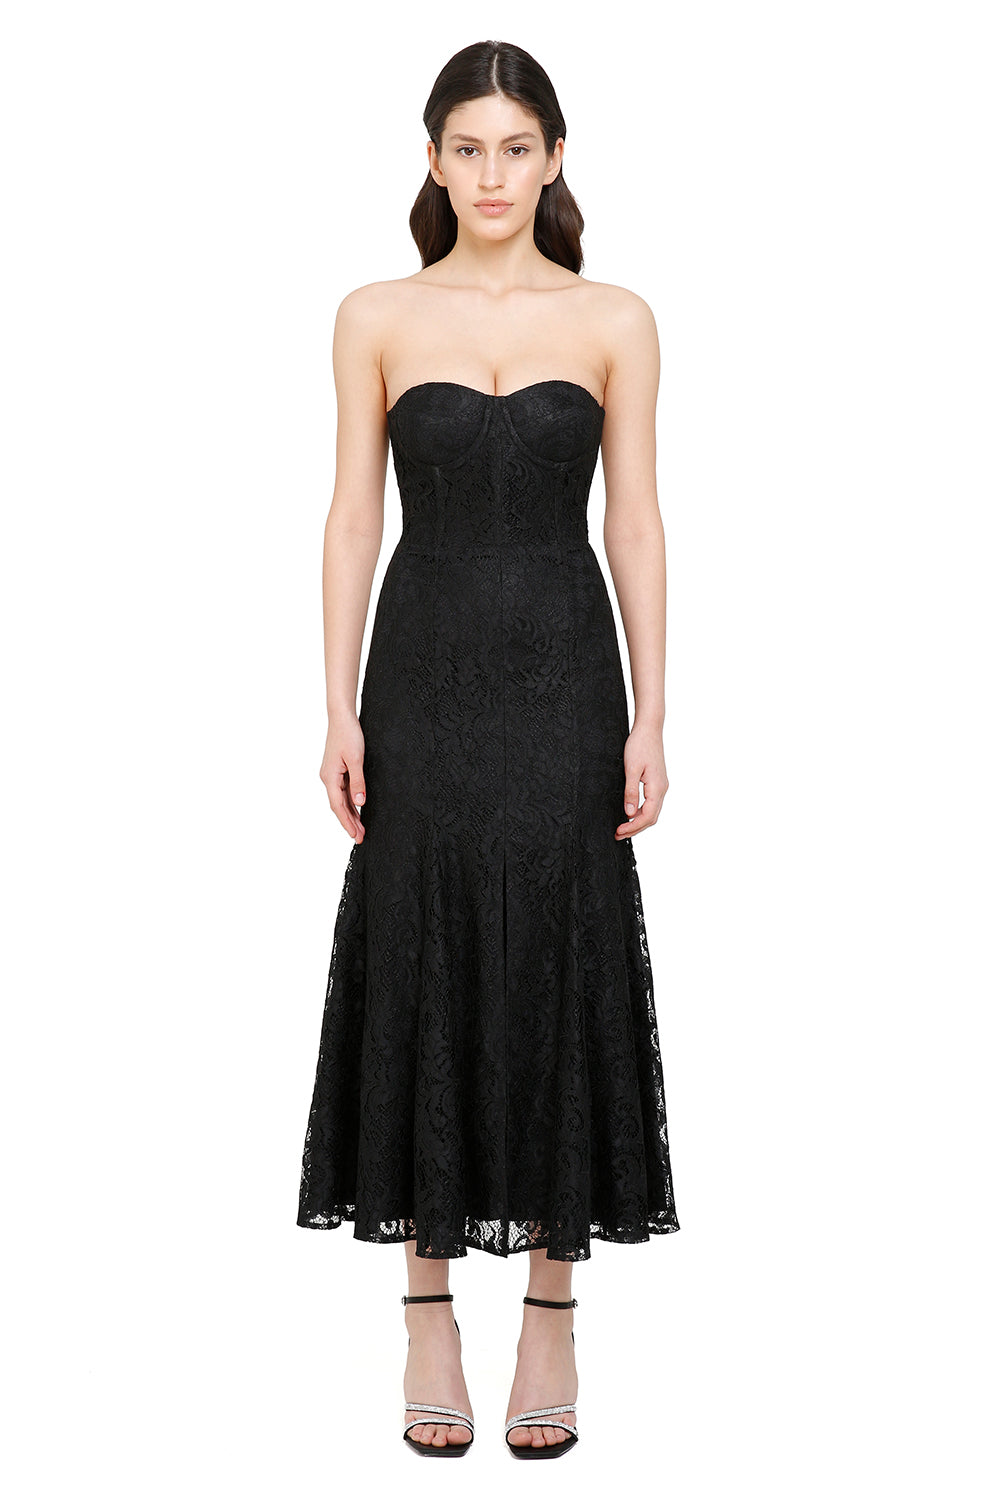 Vog Black Lace Corset Midi Dress